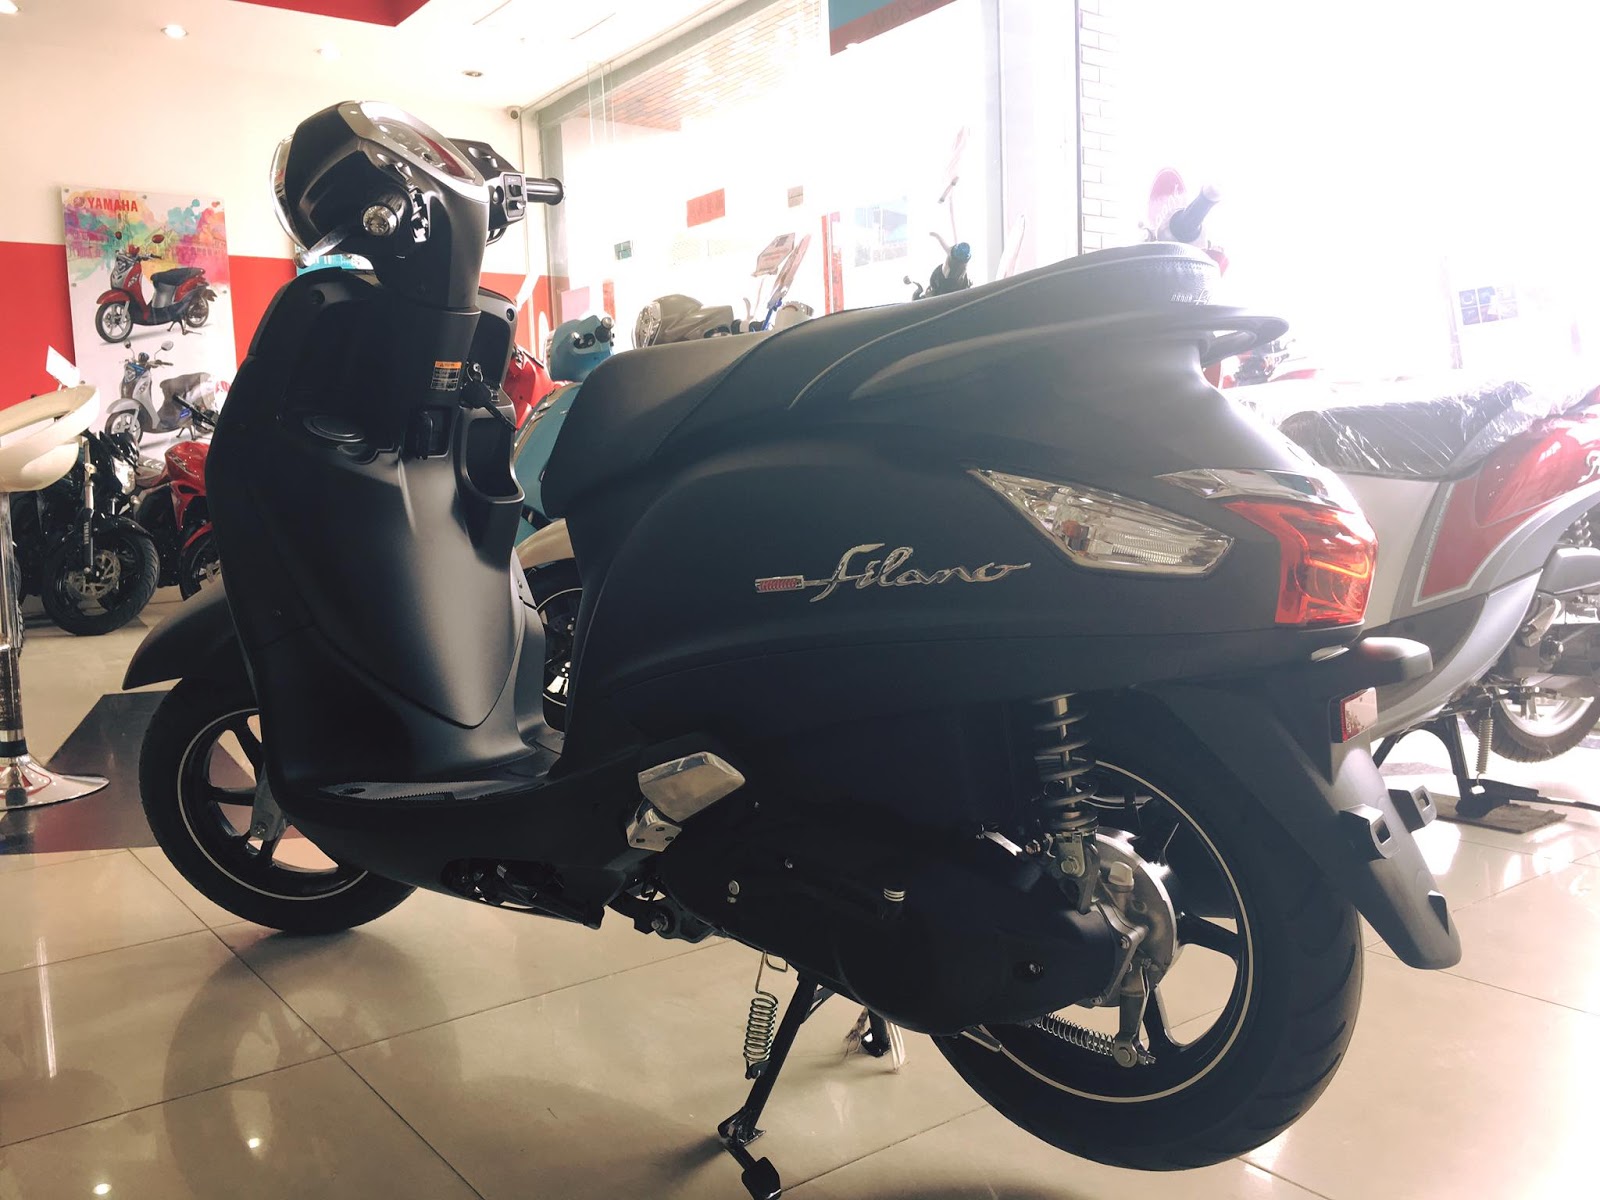 Yamaha Grand Filano Black Full option just arrived - Phnom Penh Motors